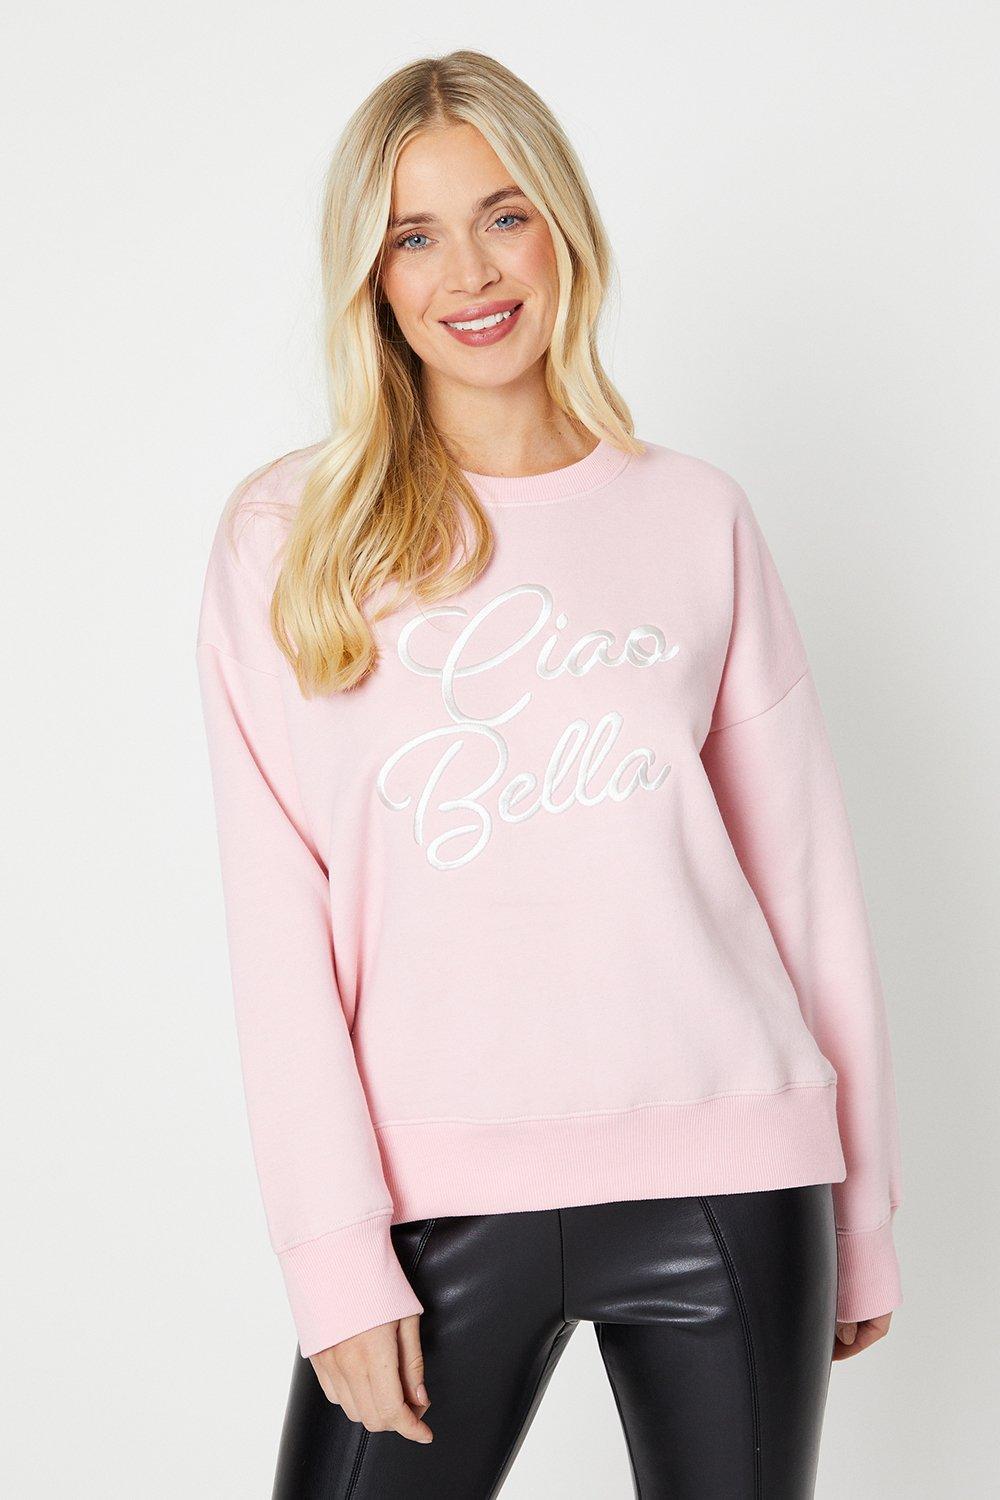 Women’s Petite Ciao Bella Sweatshirt - blush - S